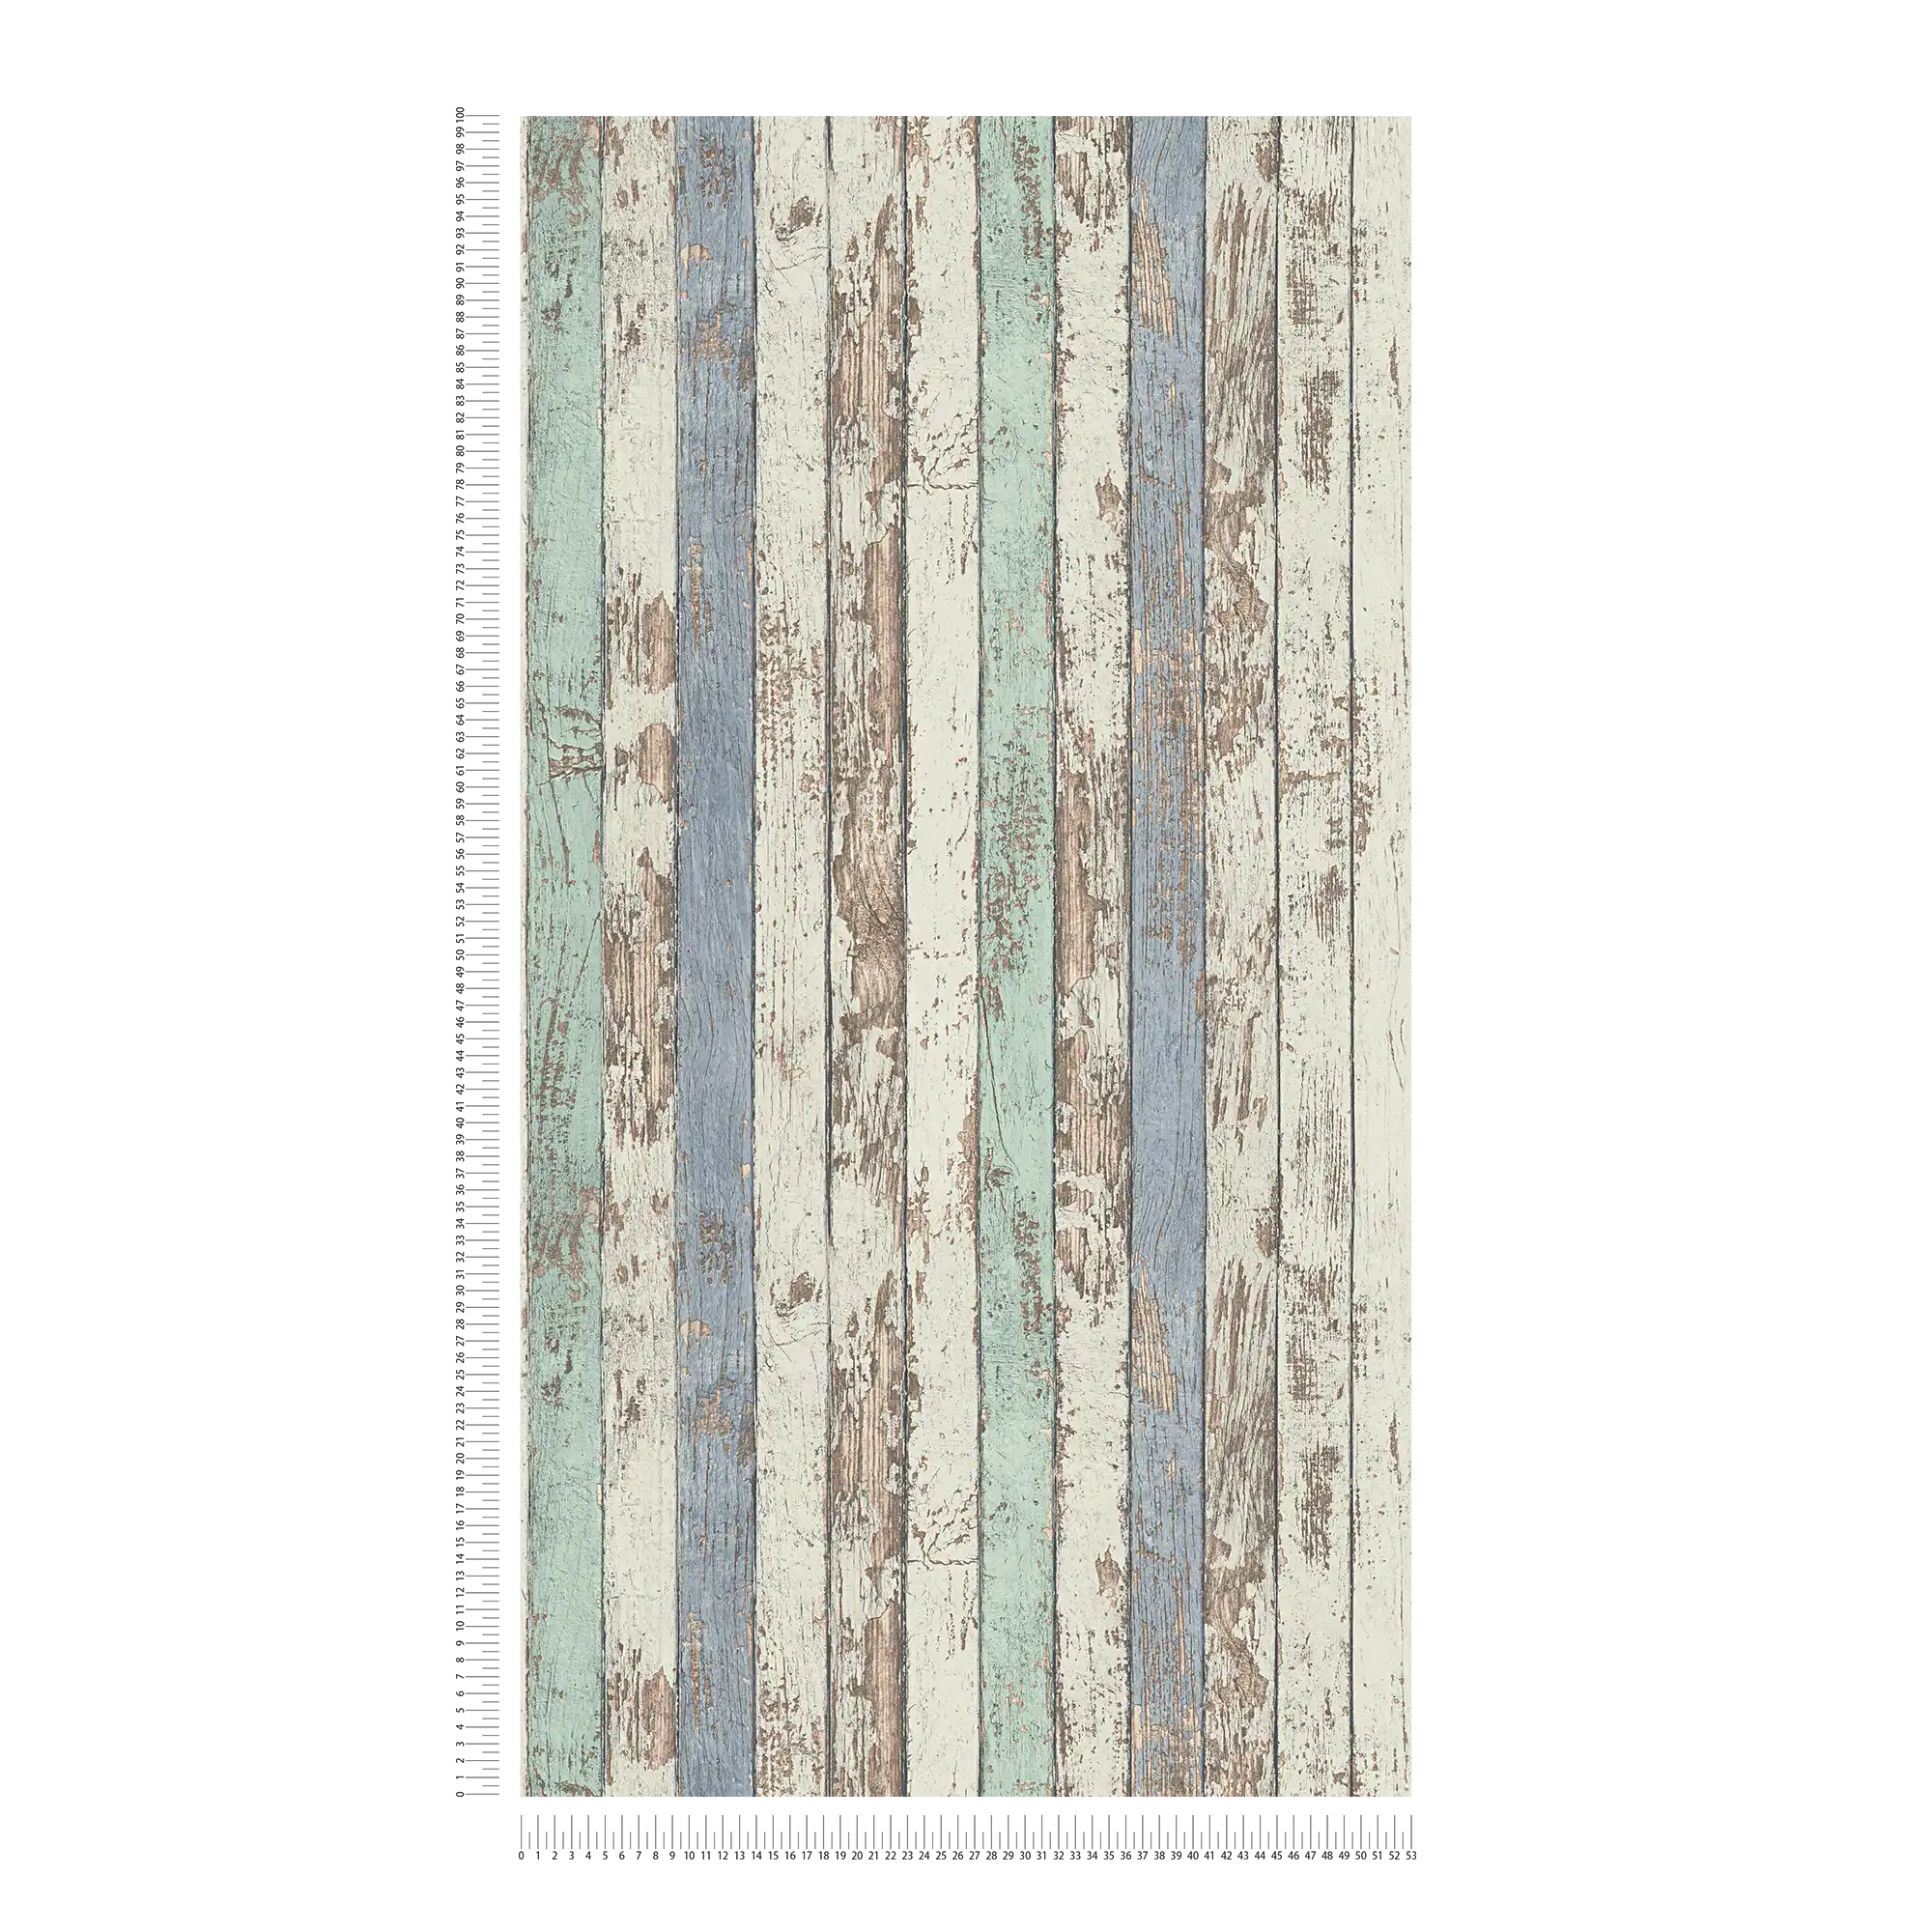             Holztapete mit buntem Brettermotiv im Shabby Chic Stil – Weiß, Braun, Blau
        